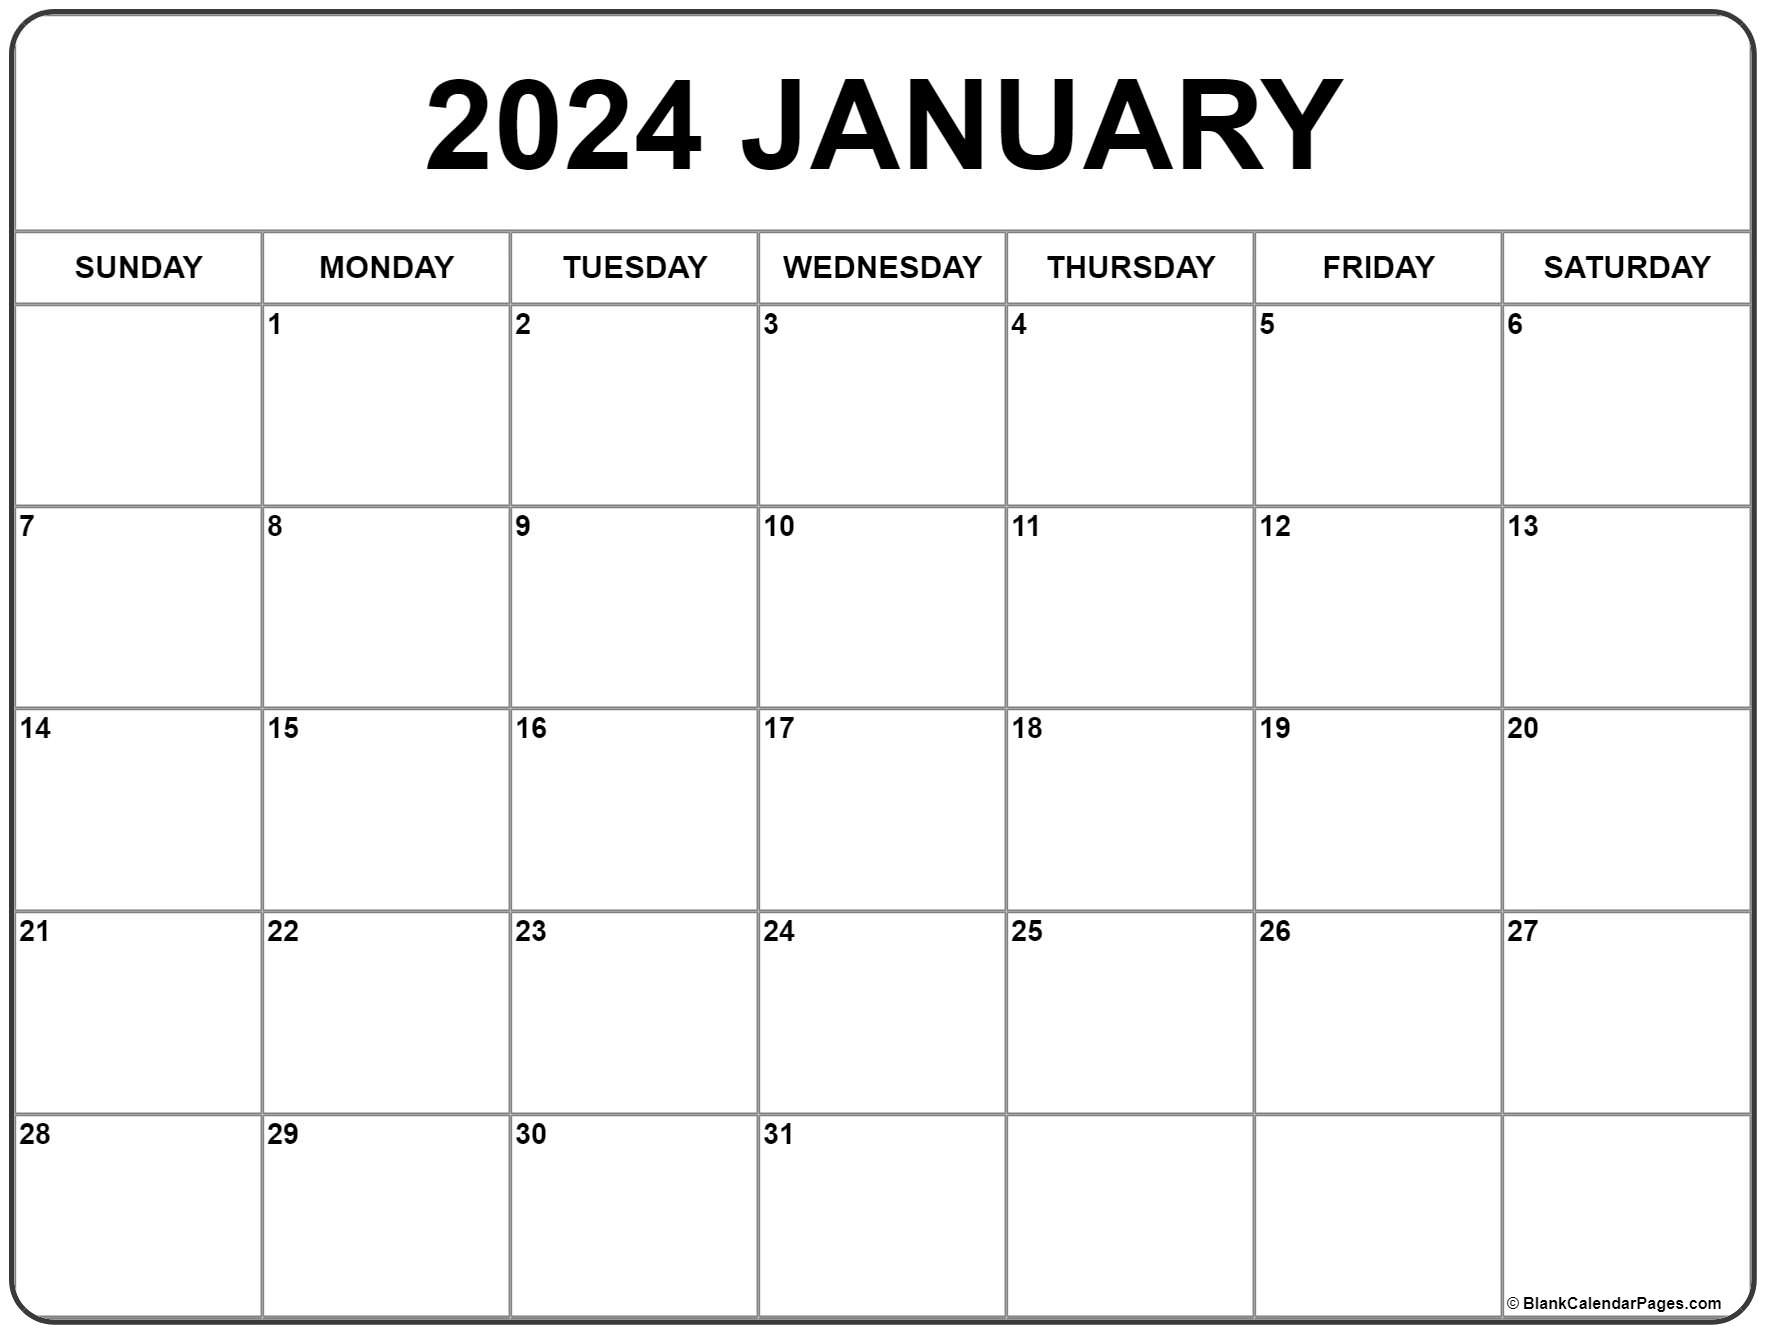 January 2024 Calendar | Free Printable Calendar for Blank Monthly Calendar Printable January 2024